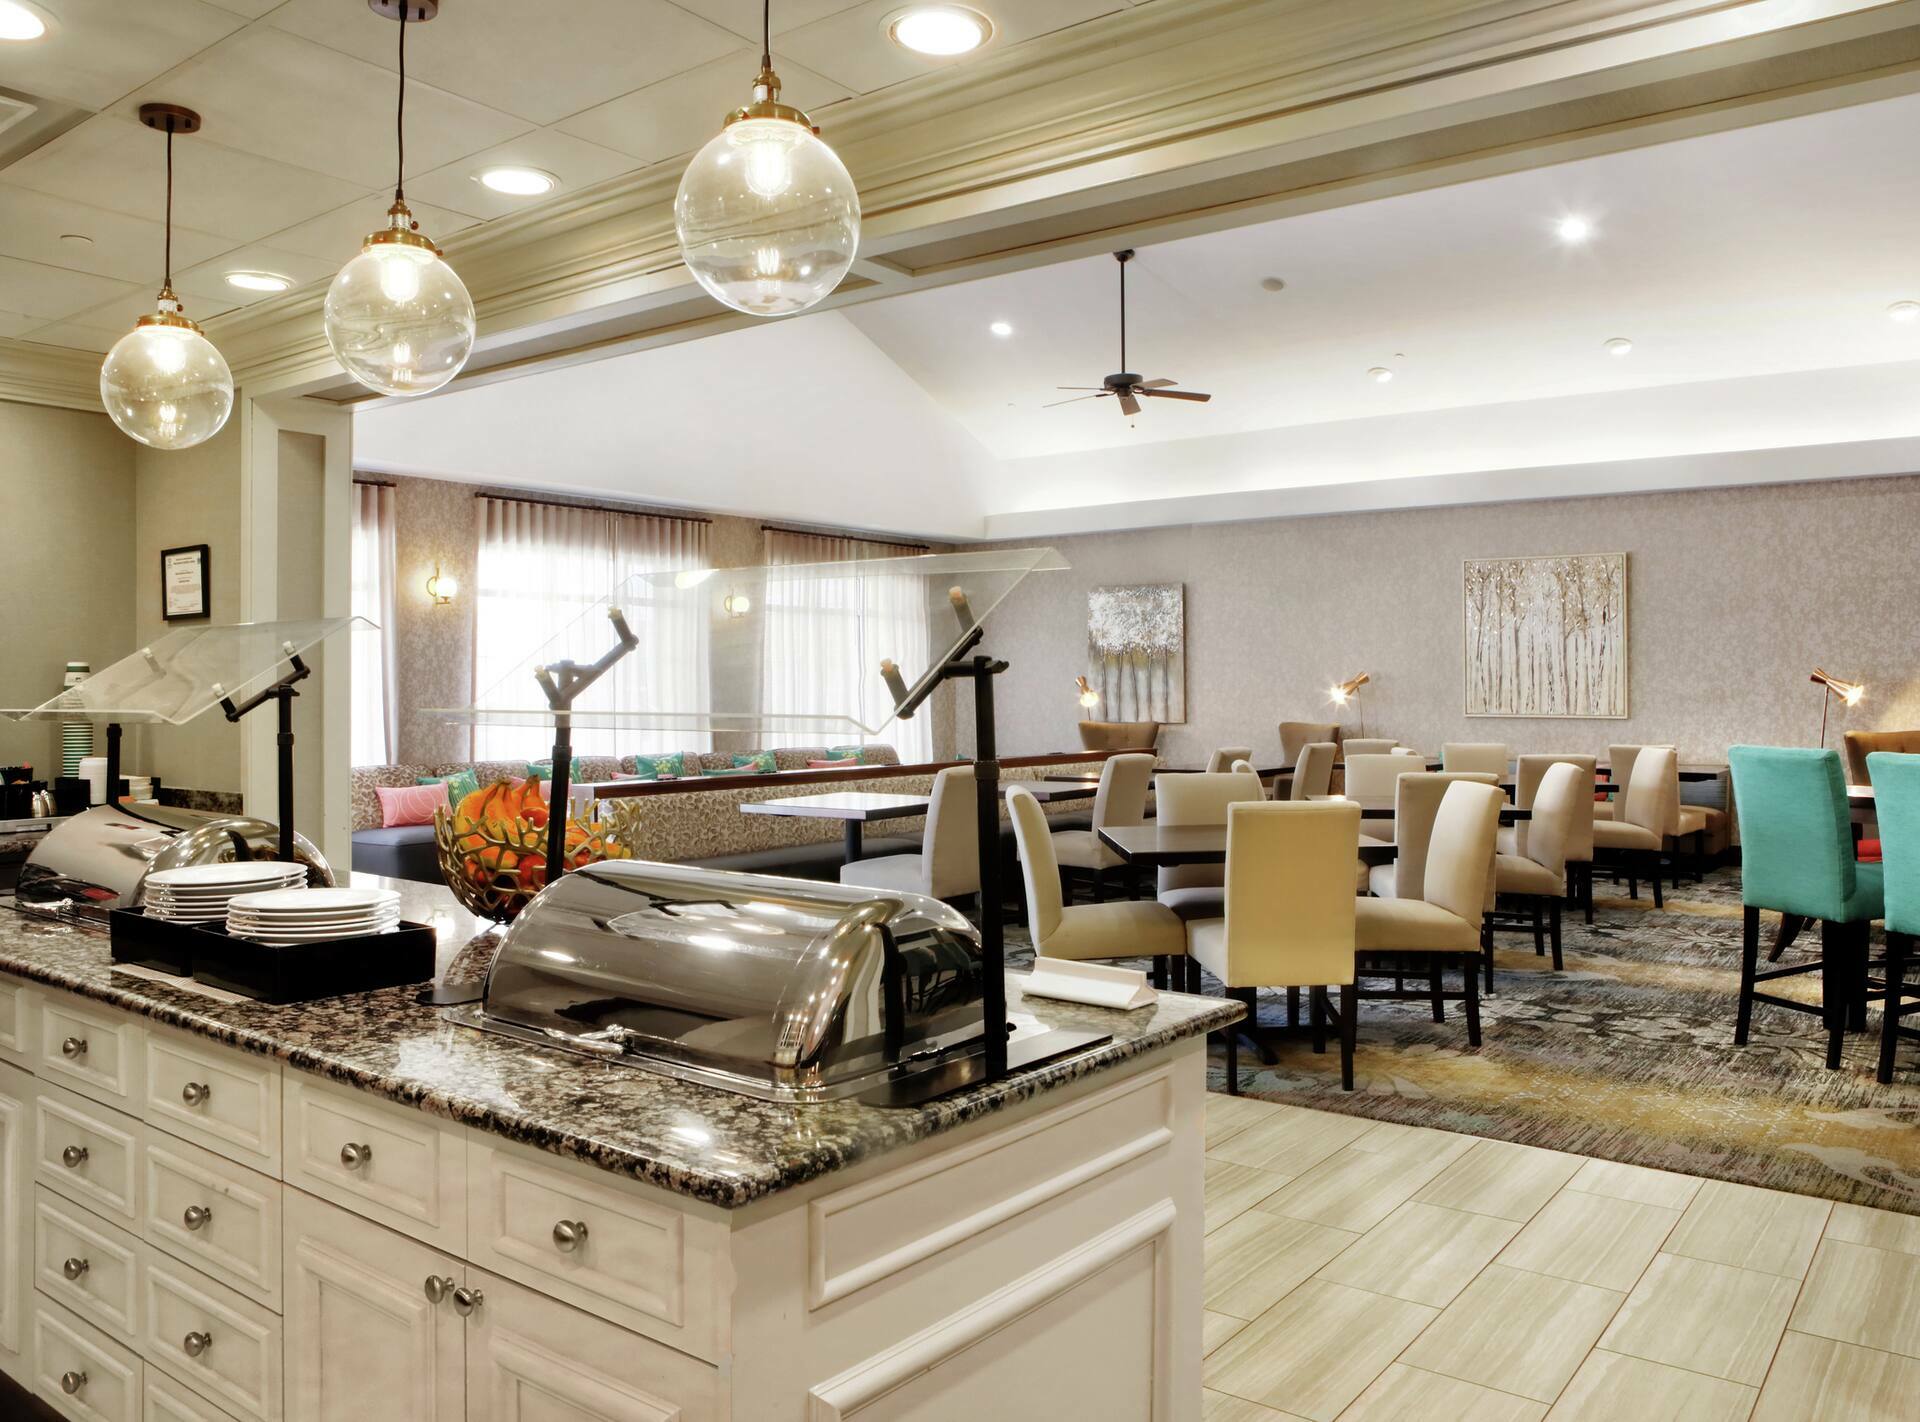 Photo of Homewood Suites by Hilton Bel Air, Bel Air, MD